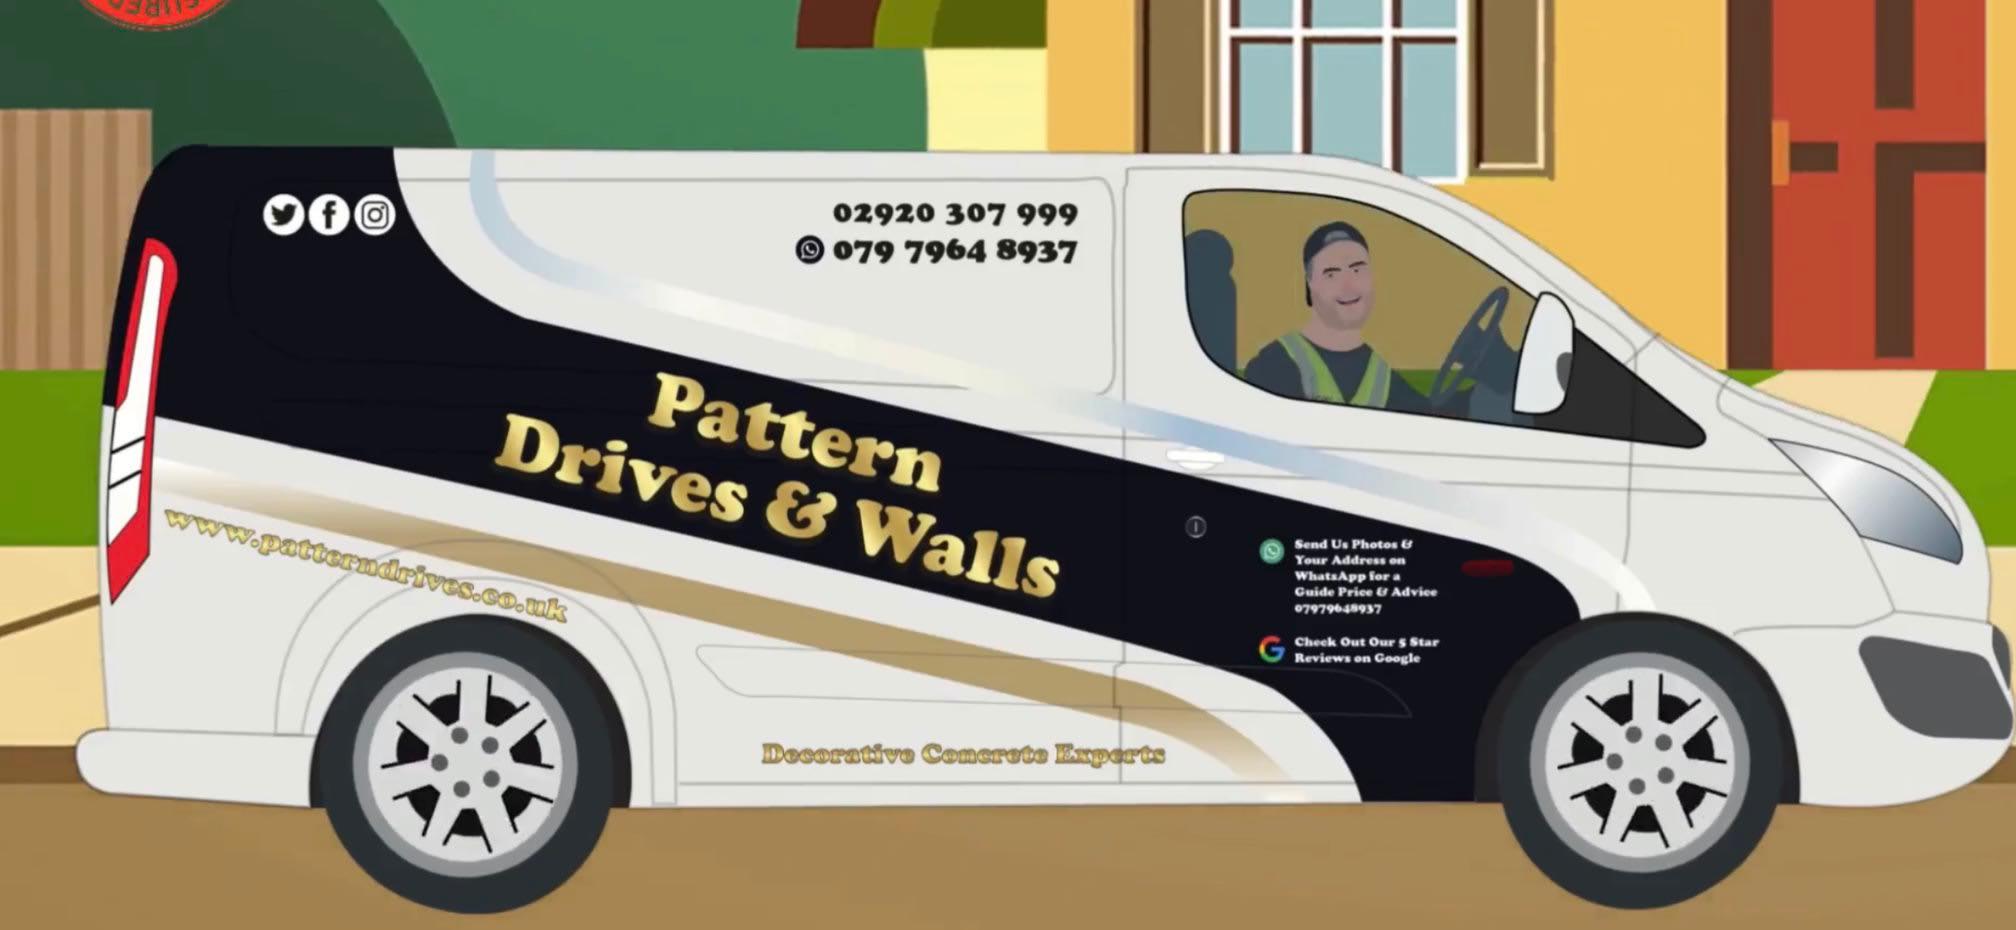 Images Pattern Drives & Walls Ltd